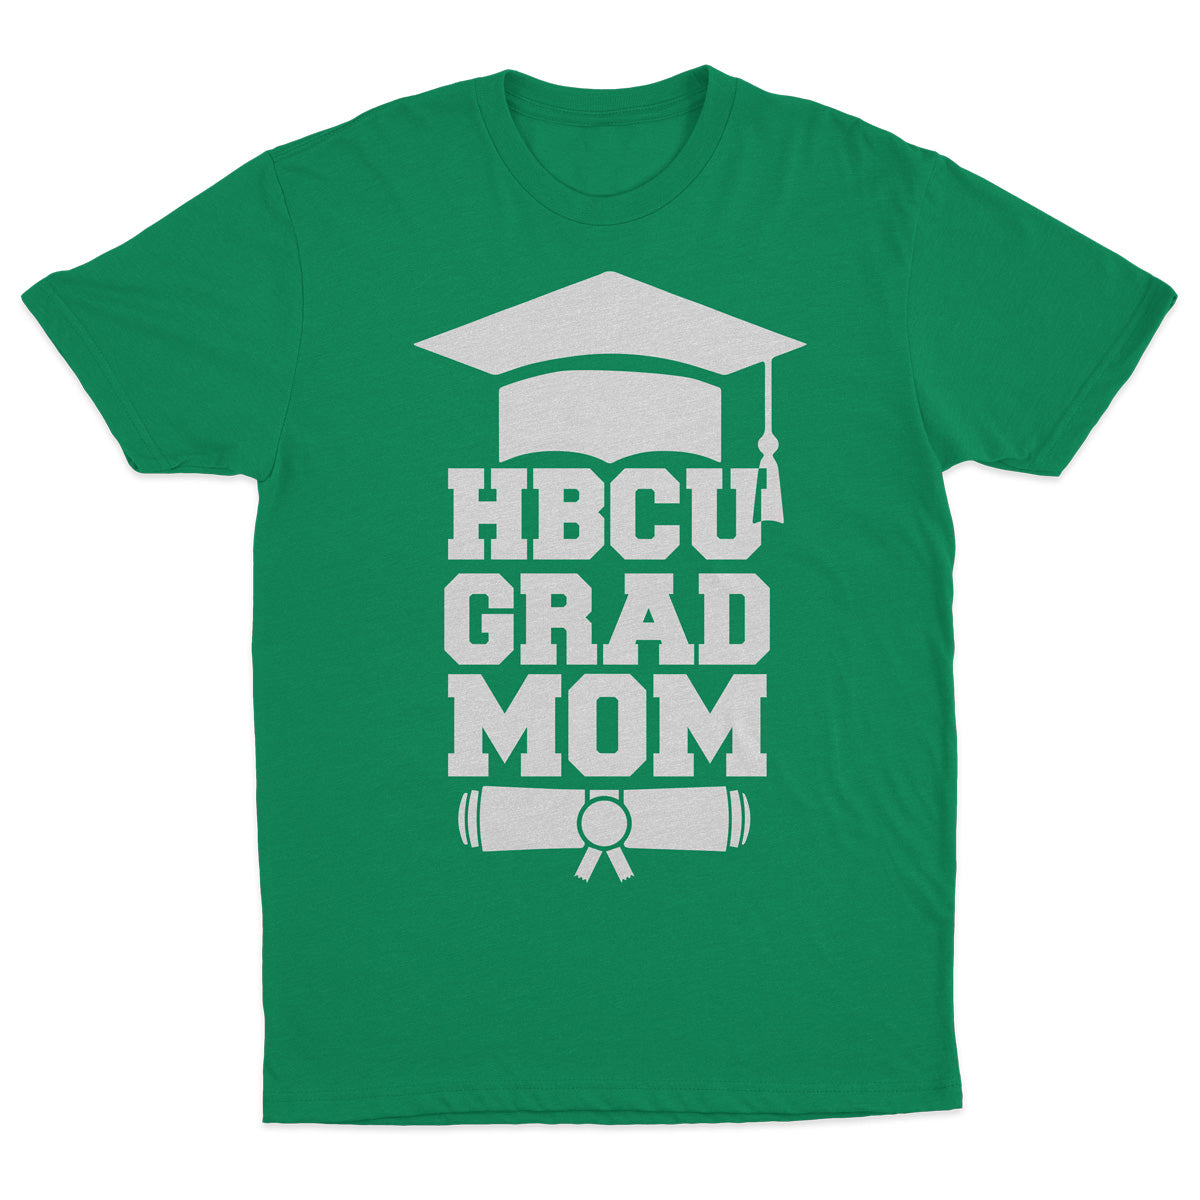 Grad Parent | HBCU Mom | Unisex Tee - Kelly Green